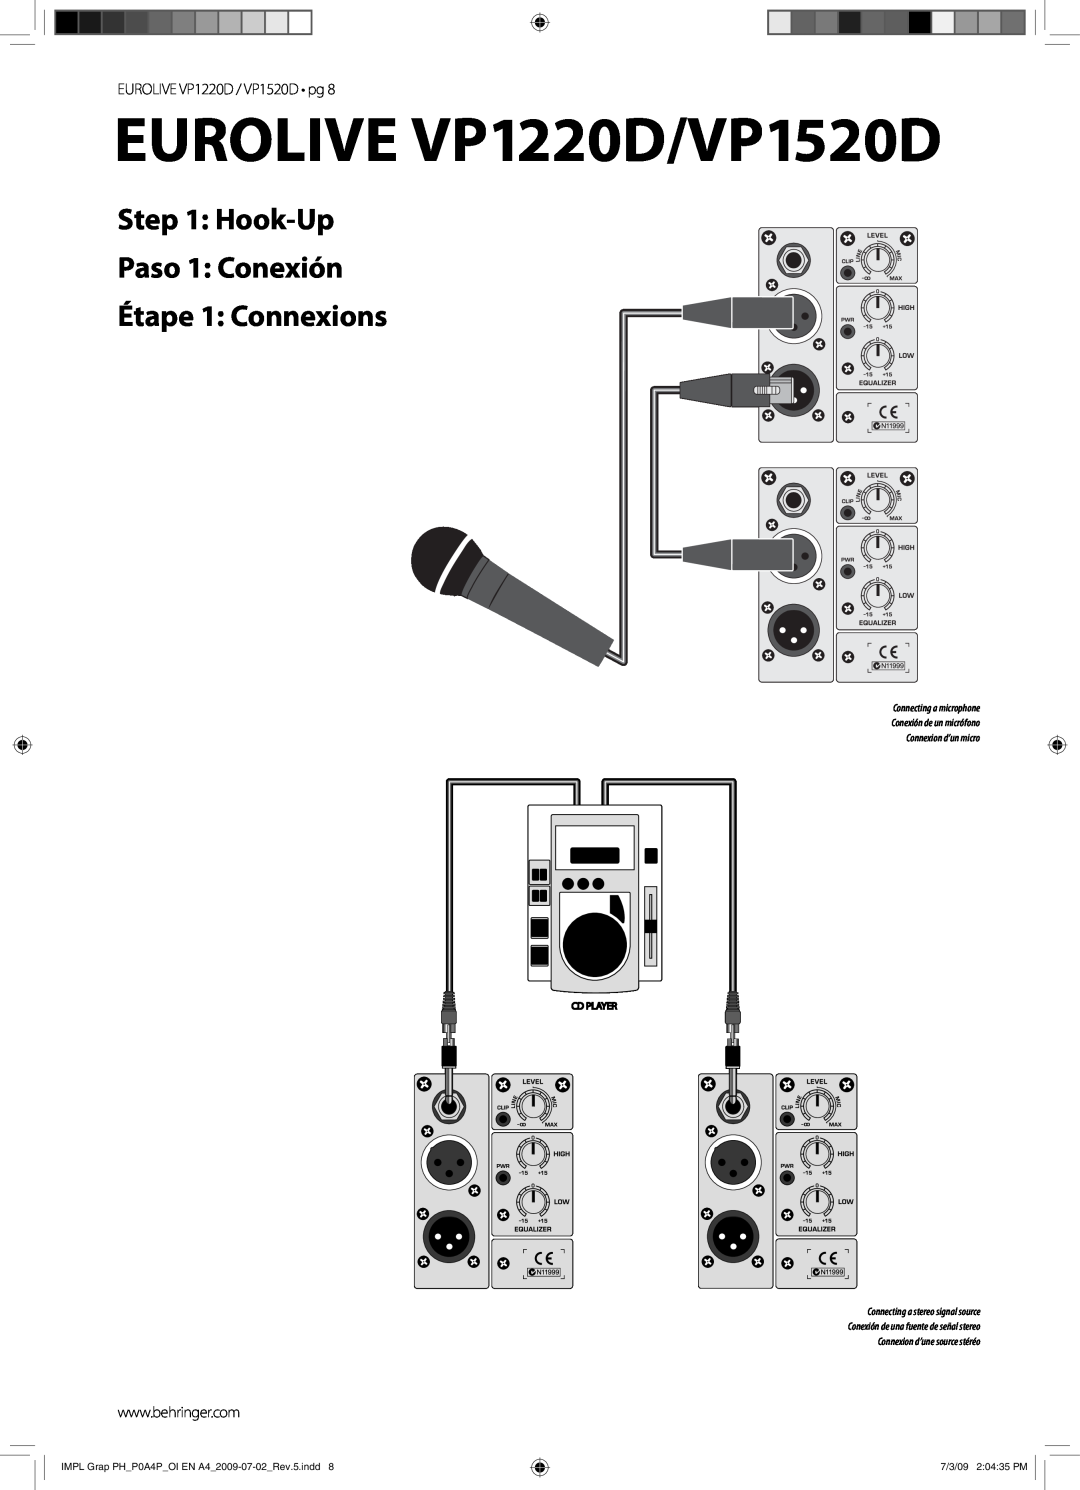 Behringer manual EUROLIVE VP1220D/VP1520D, Hook-Up Paso 1 Conexión, Étape 1 Connexions, EUROLIVE VP1220D / VP1520D pg 